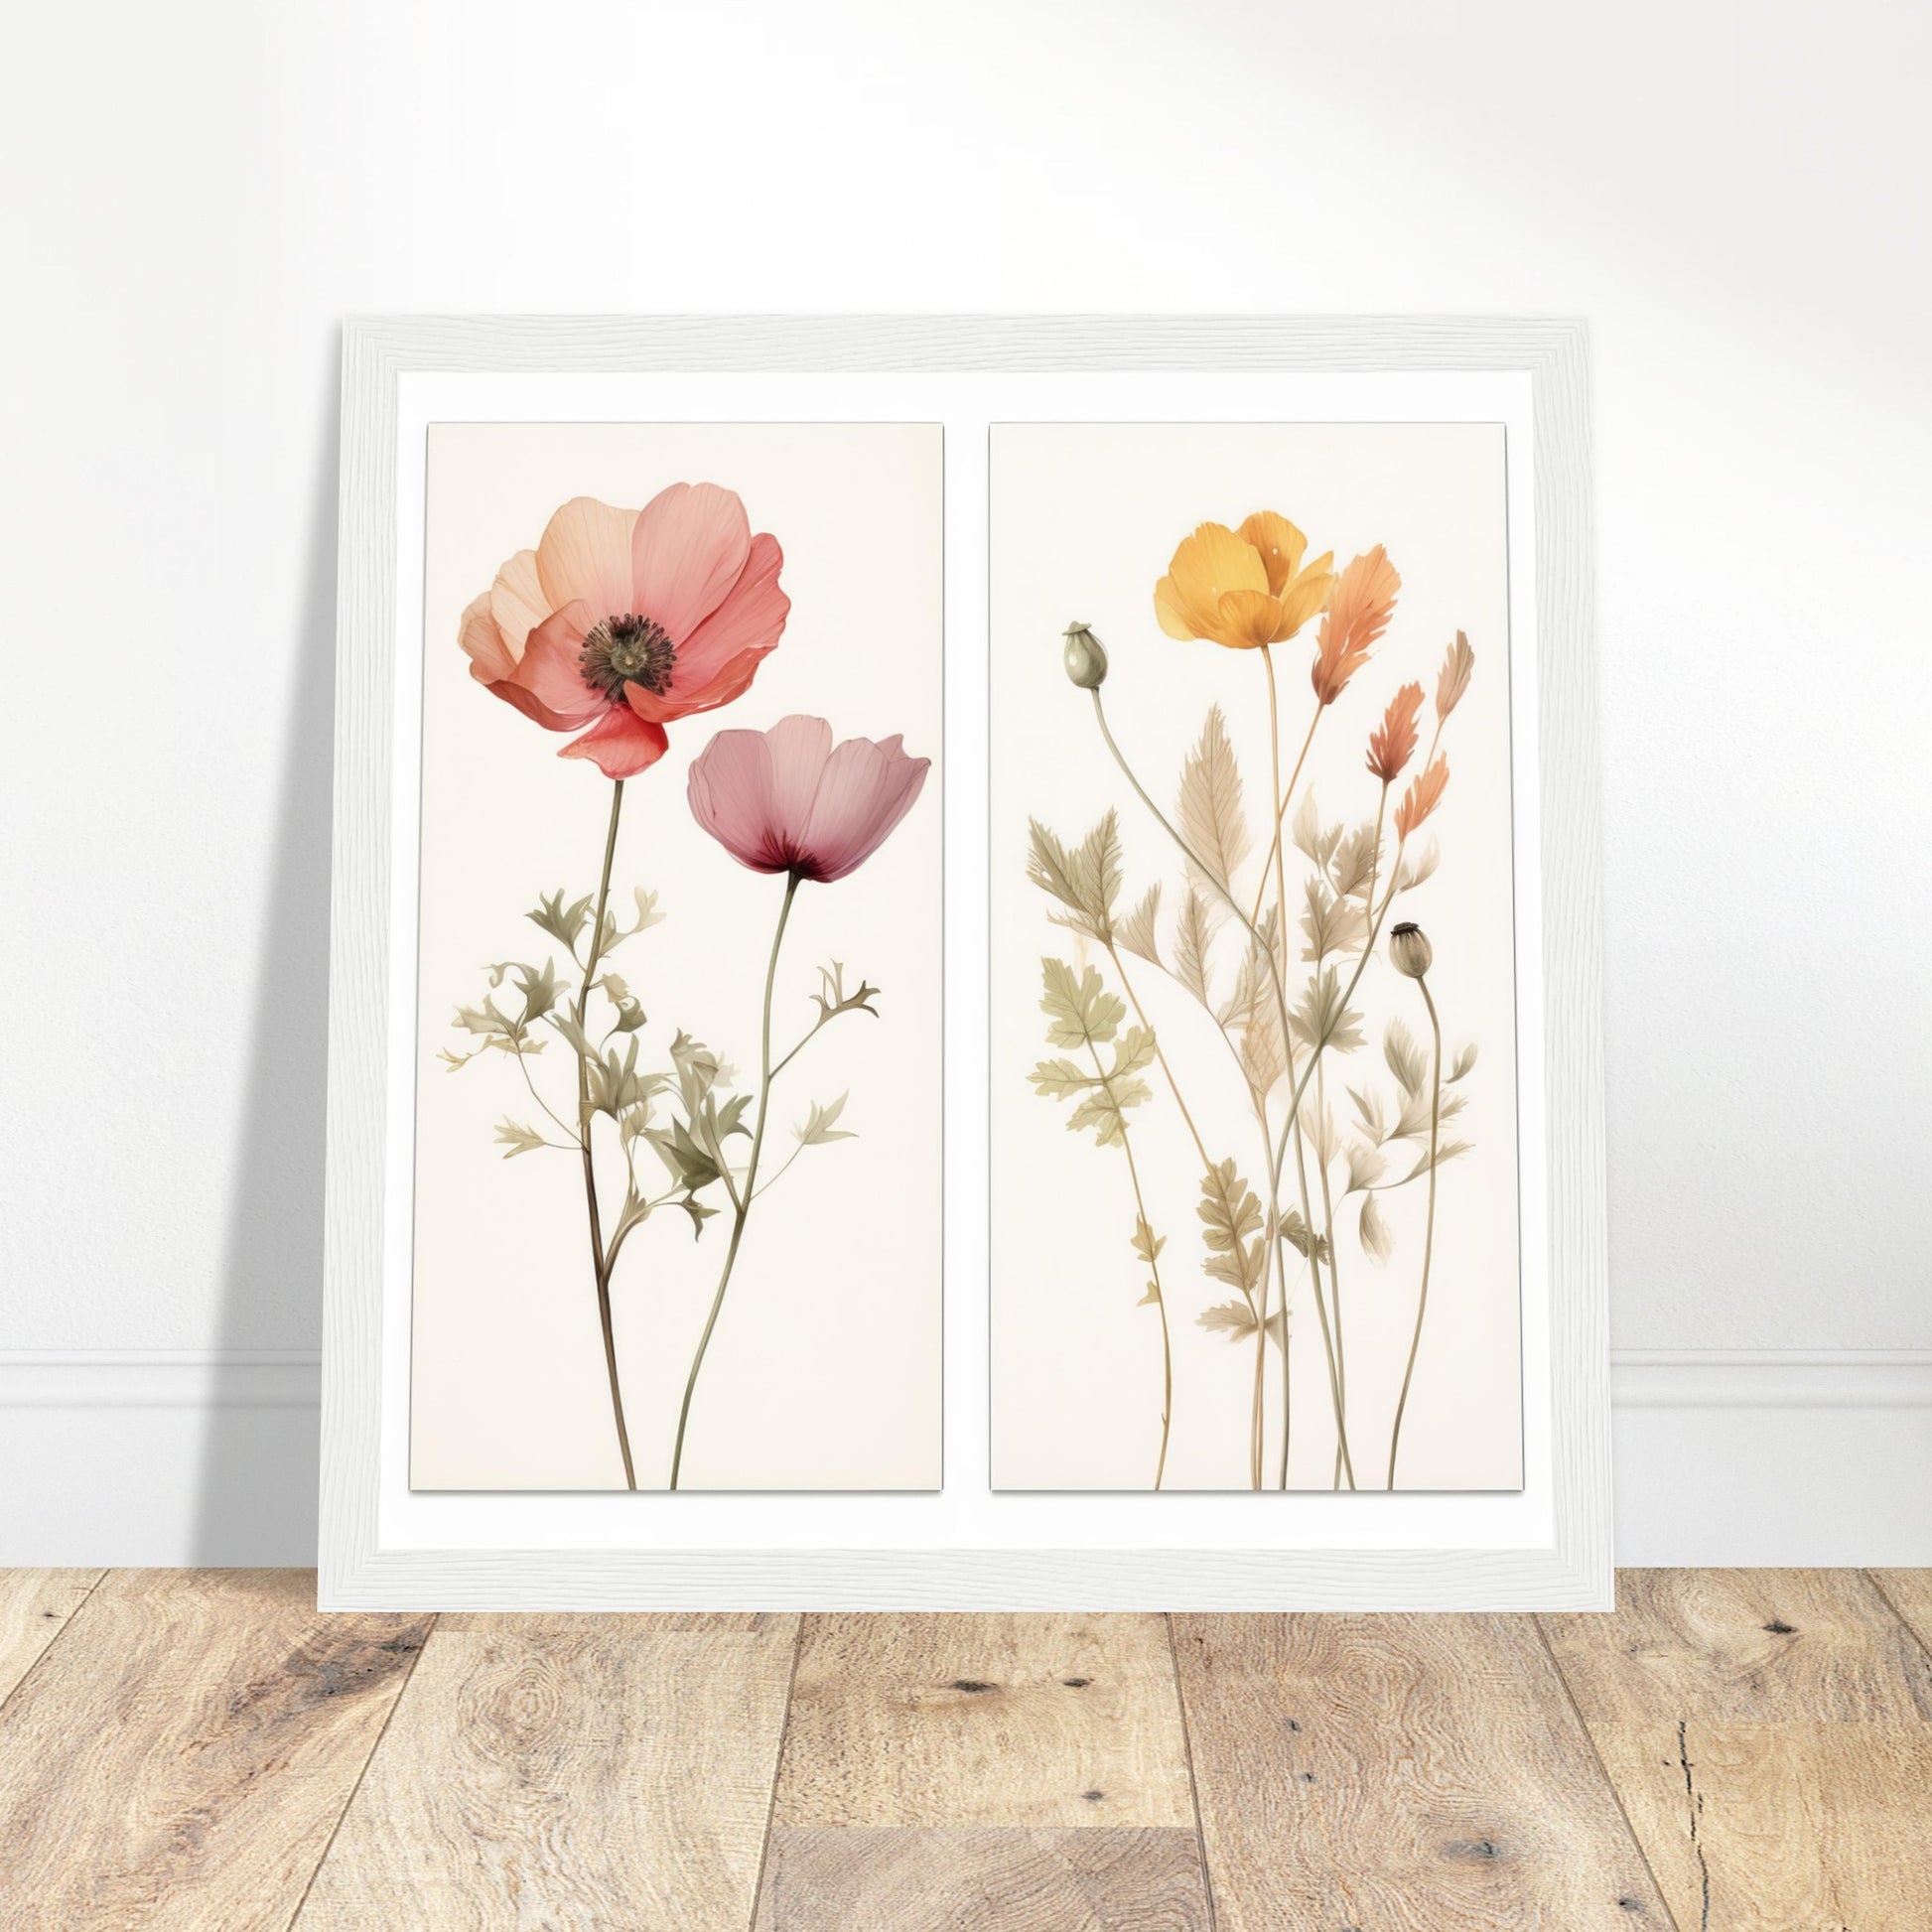 Elegance - Botanical Artwork #2- Print Room Ltd Dark wood frame 30x30 cm / 12x12"